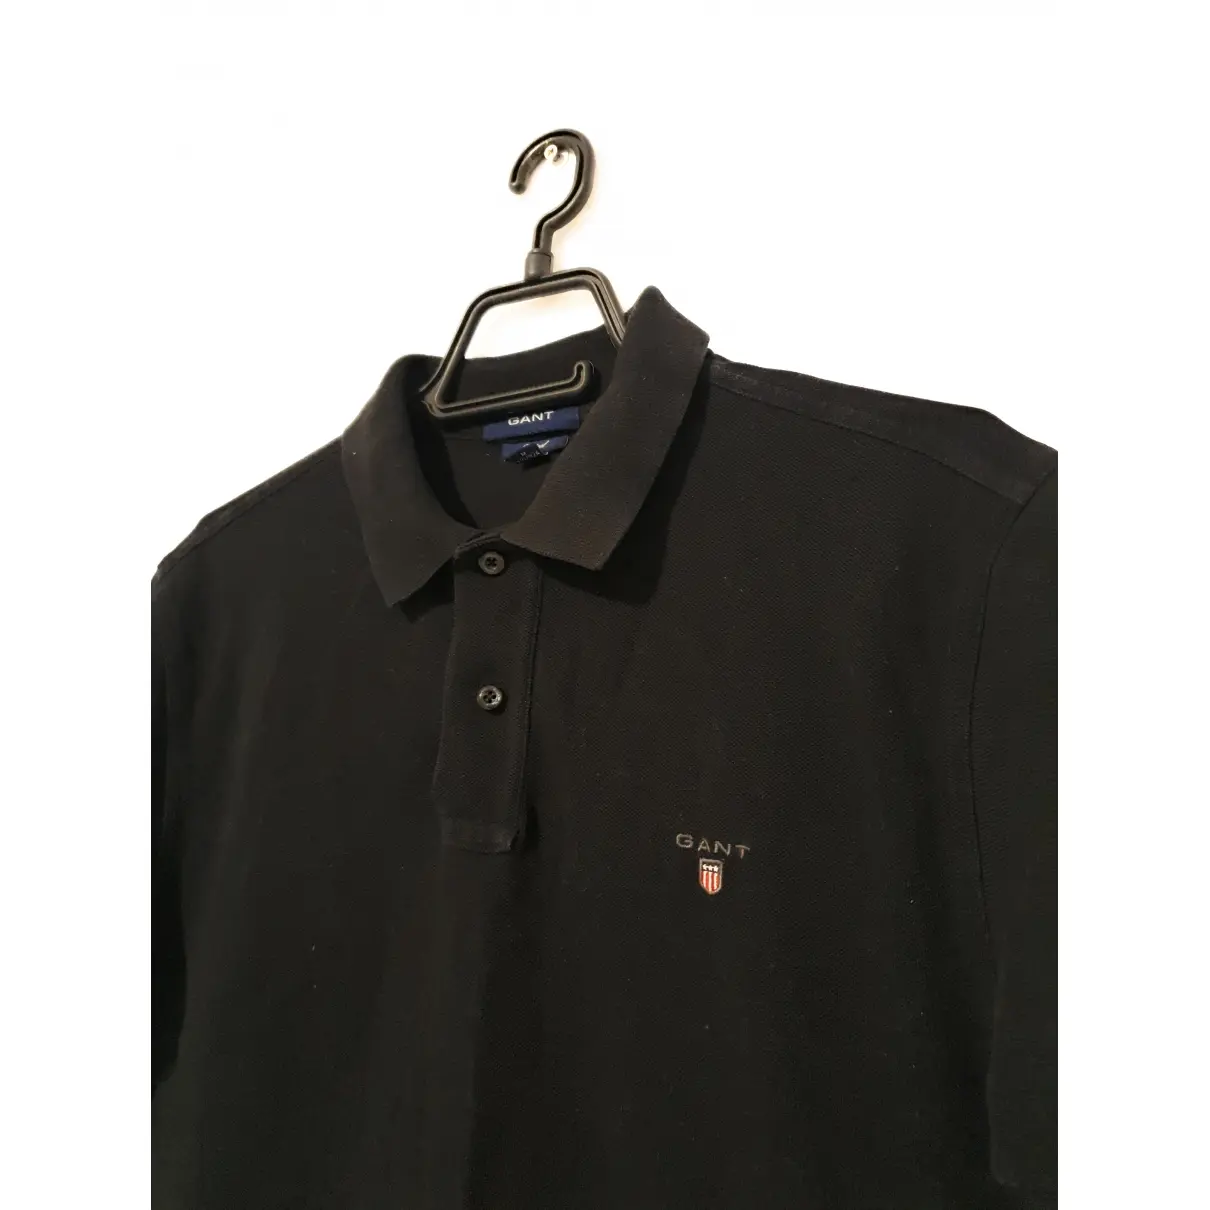 Buy Gant Polo shirt online